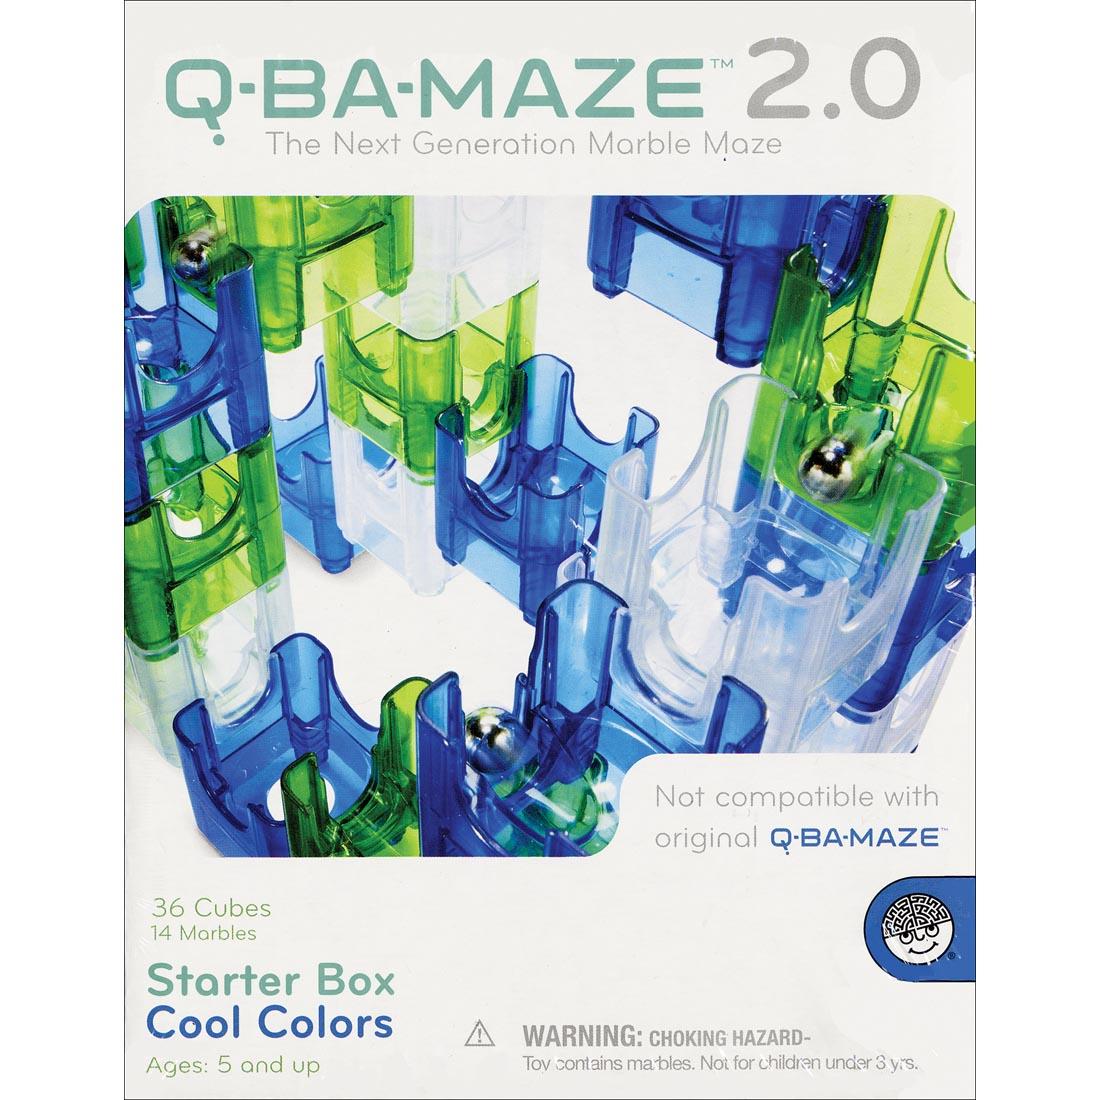 Q-BA-MAZE 2.0 Cool Colors Starter Box